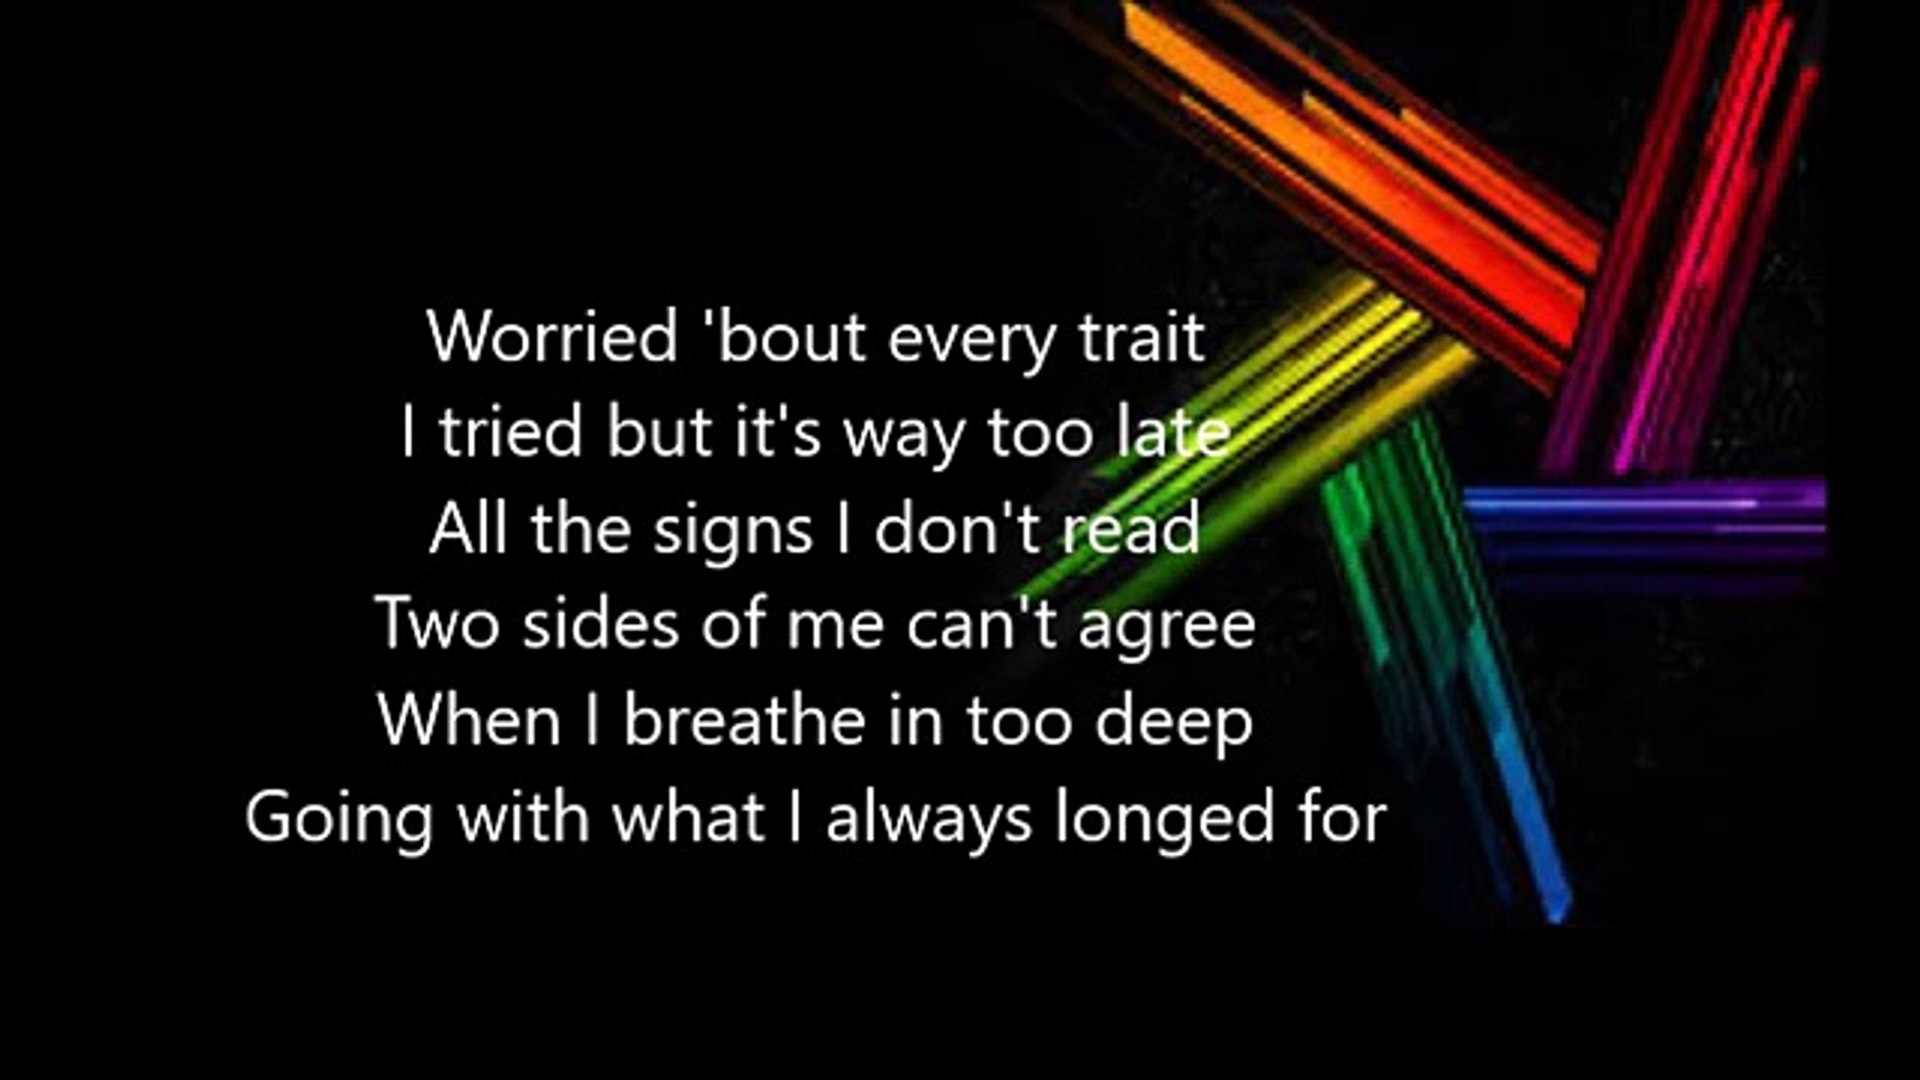 Some lyrics I love from Rihanna - same ol mistakes